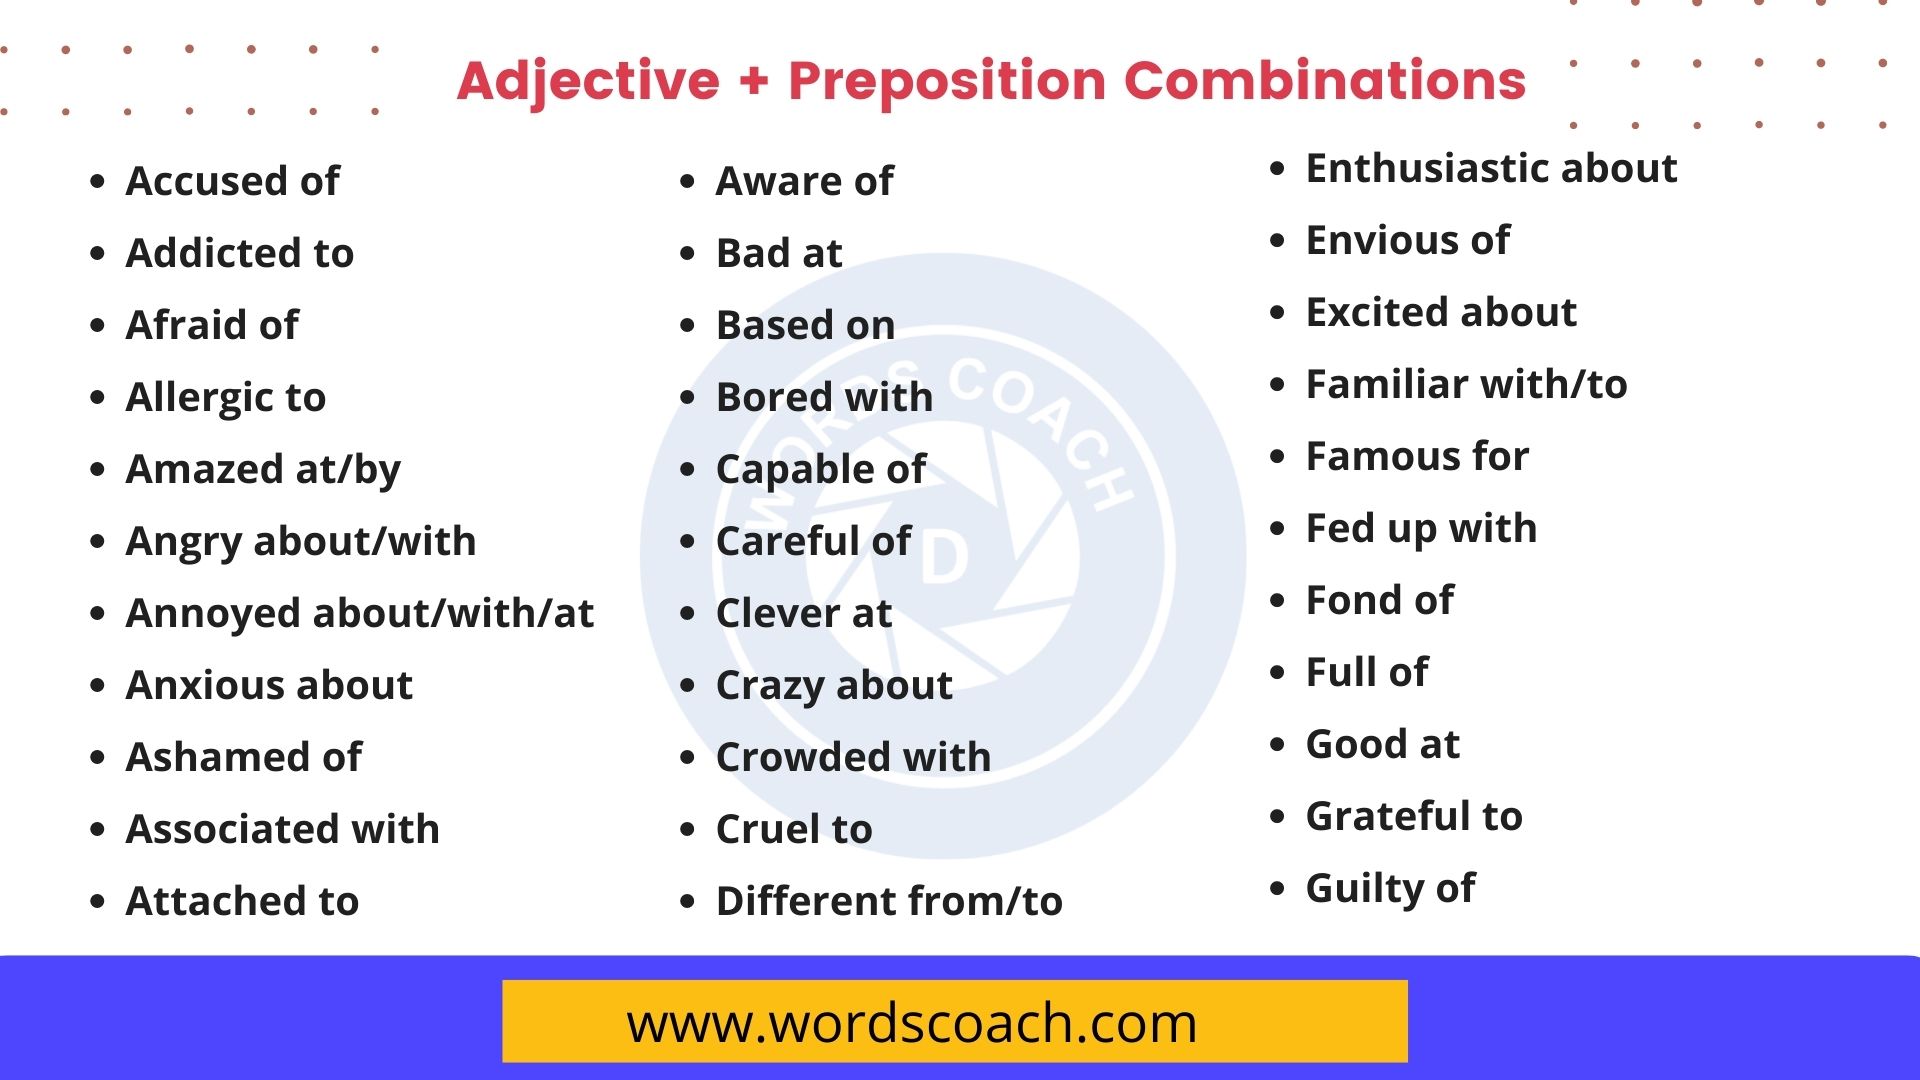 Adjective + Preposition Combinations